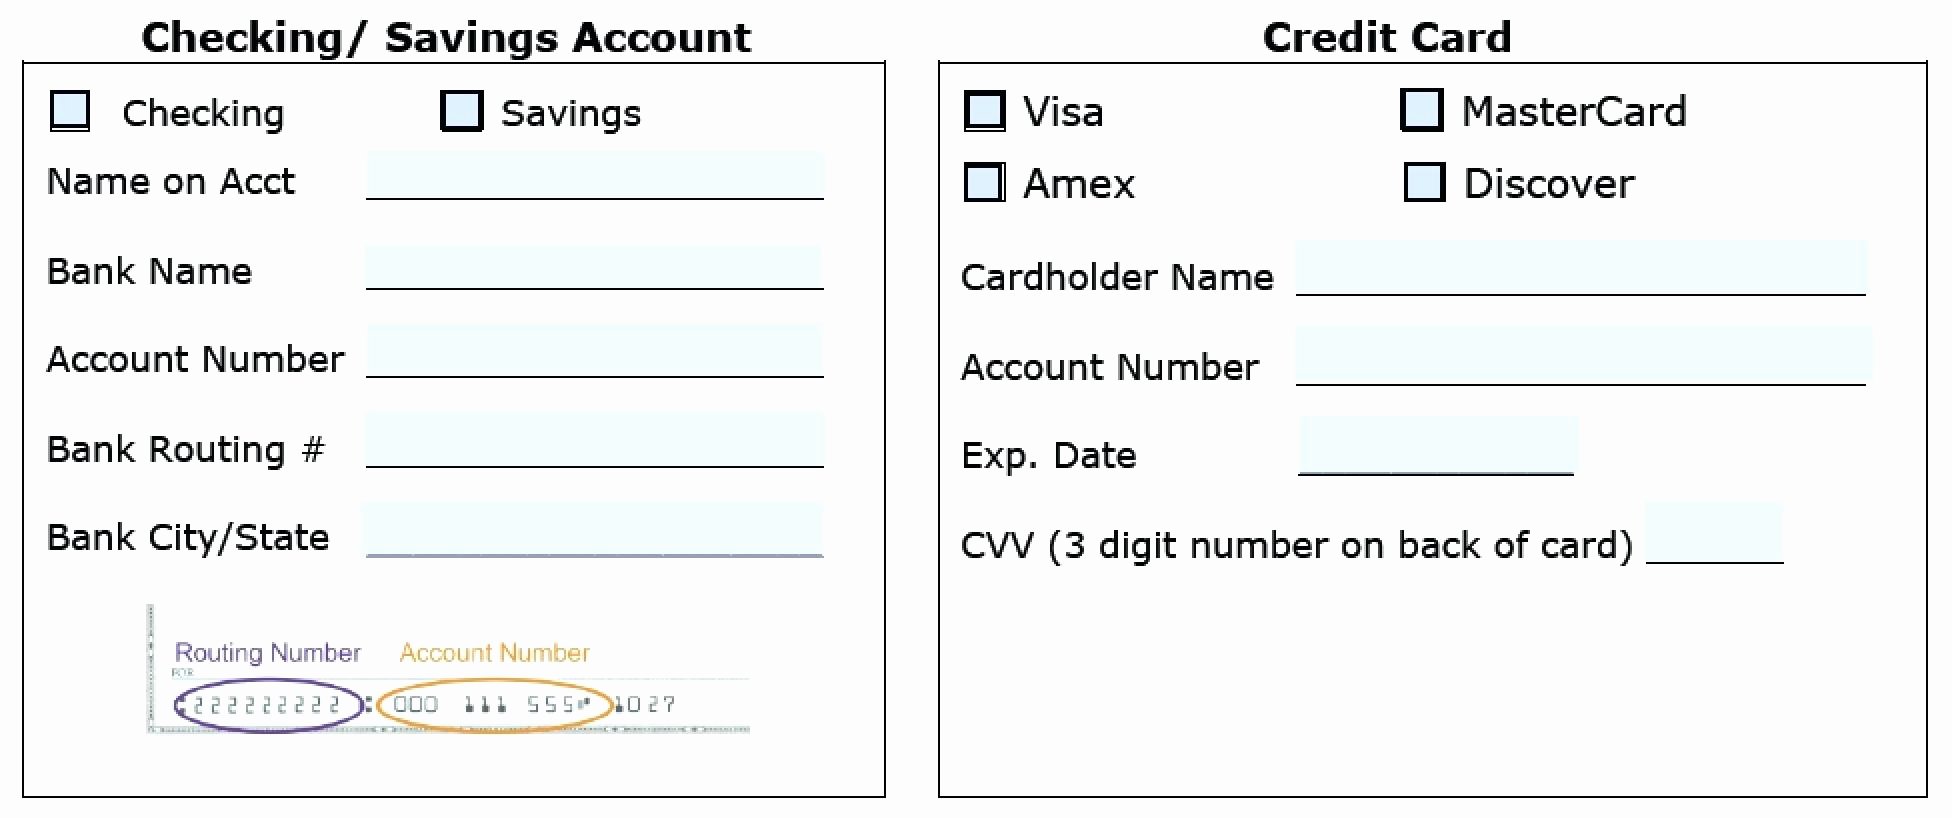 Credit Card Template Word Inspirational Template Credit Card Authorization form Template Word